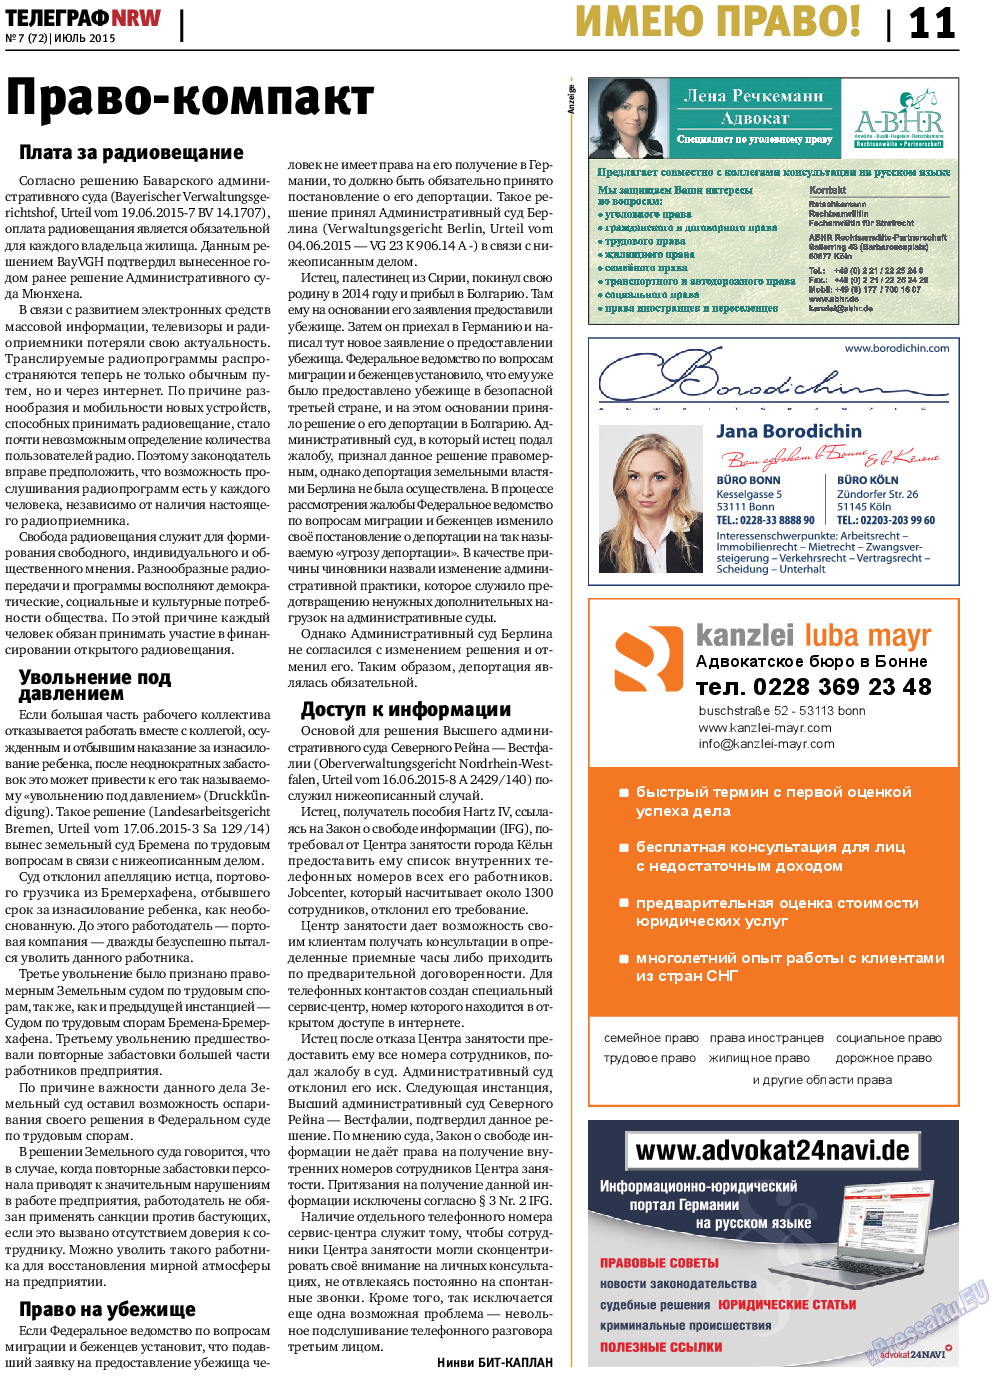 Телеграф NRW, газета. 2015 №7 стр.11